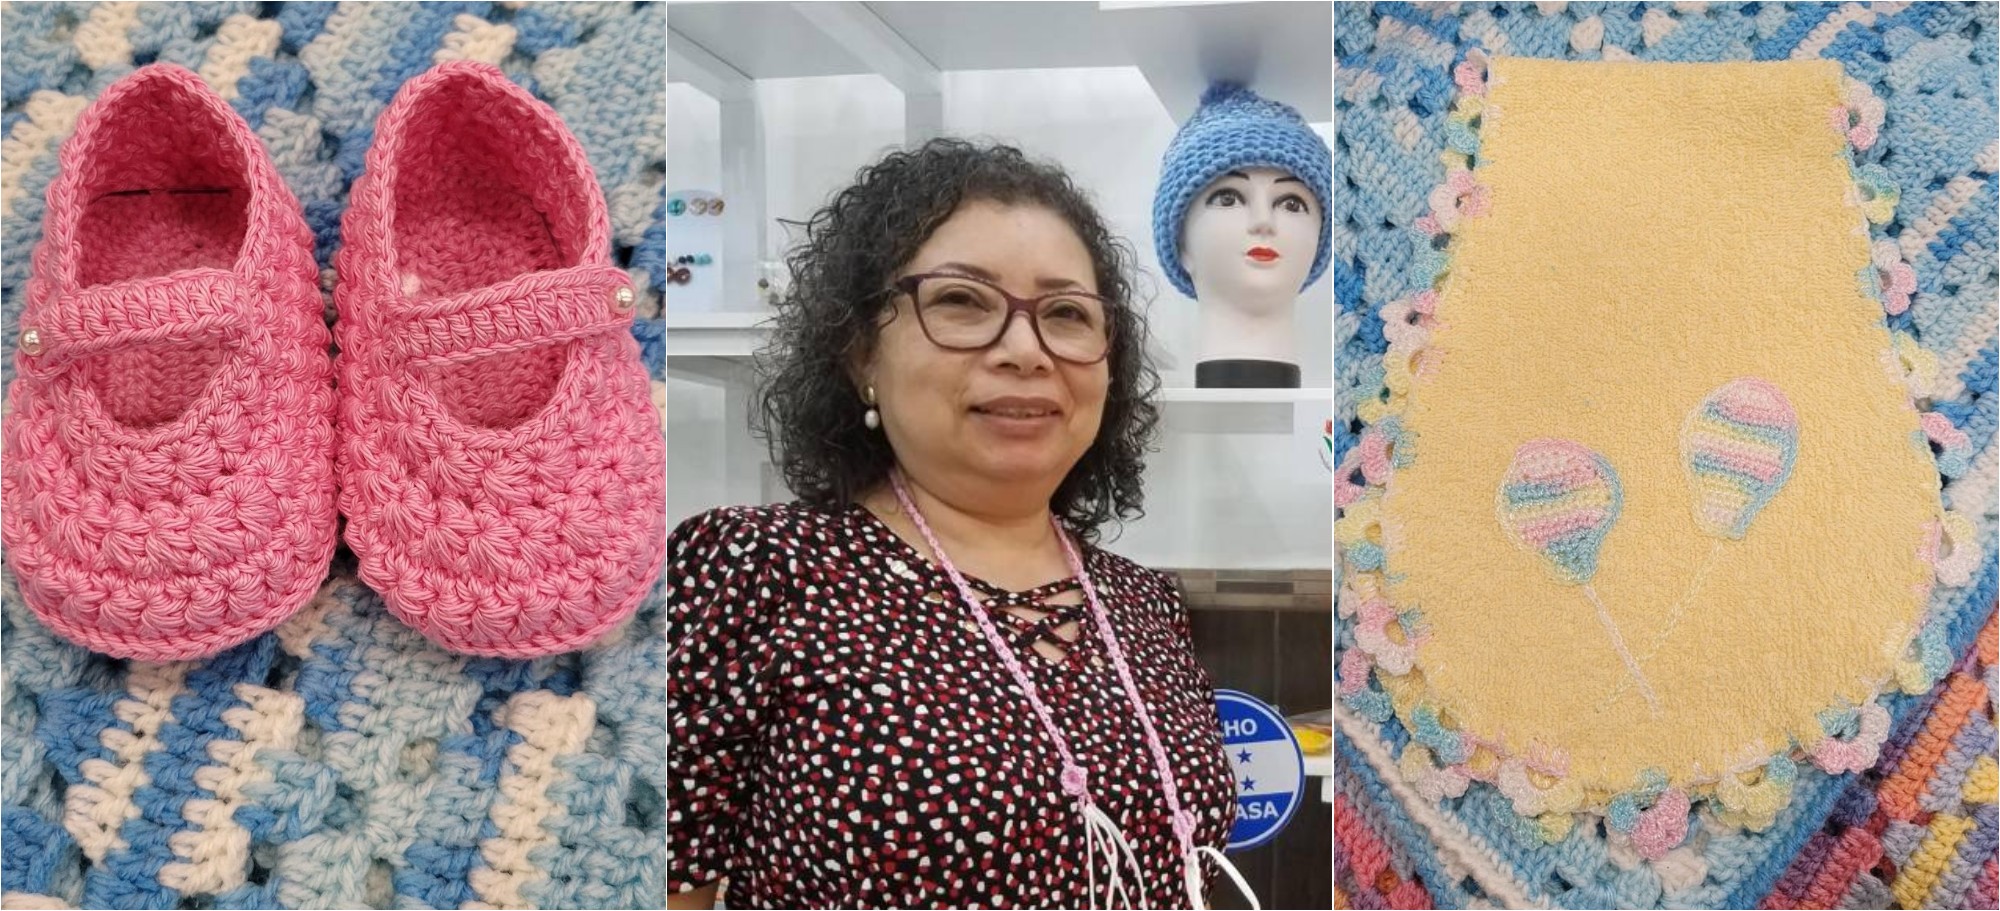 Hondureña crea hermosos productos elaborados con crochet